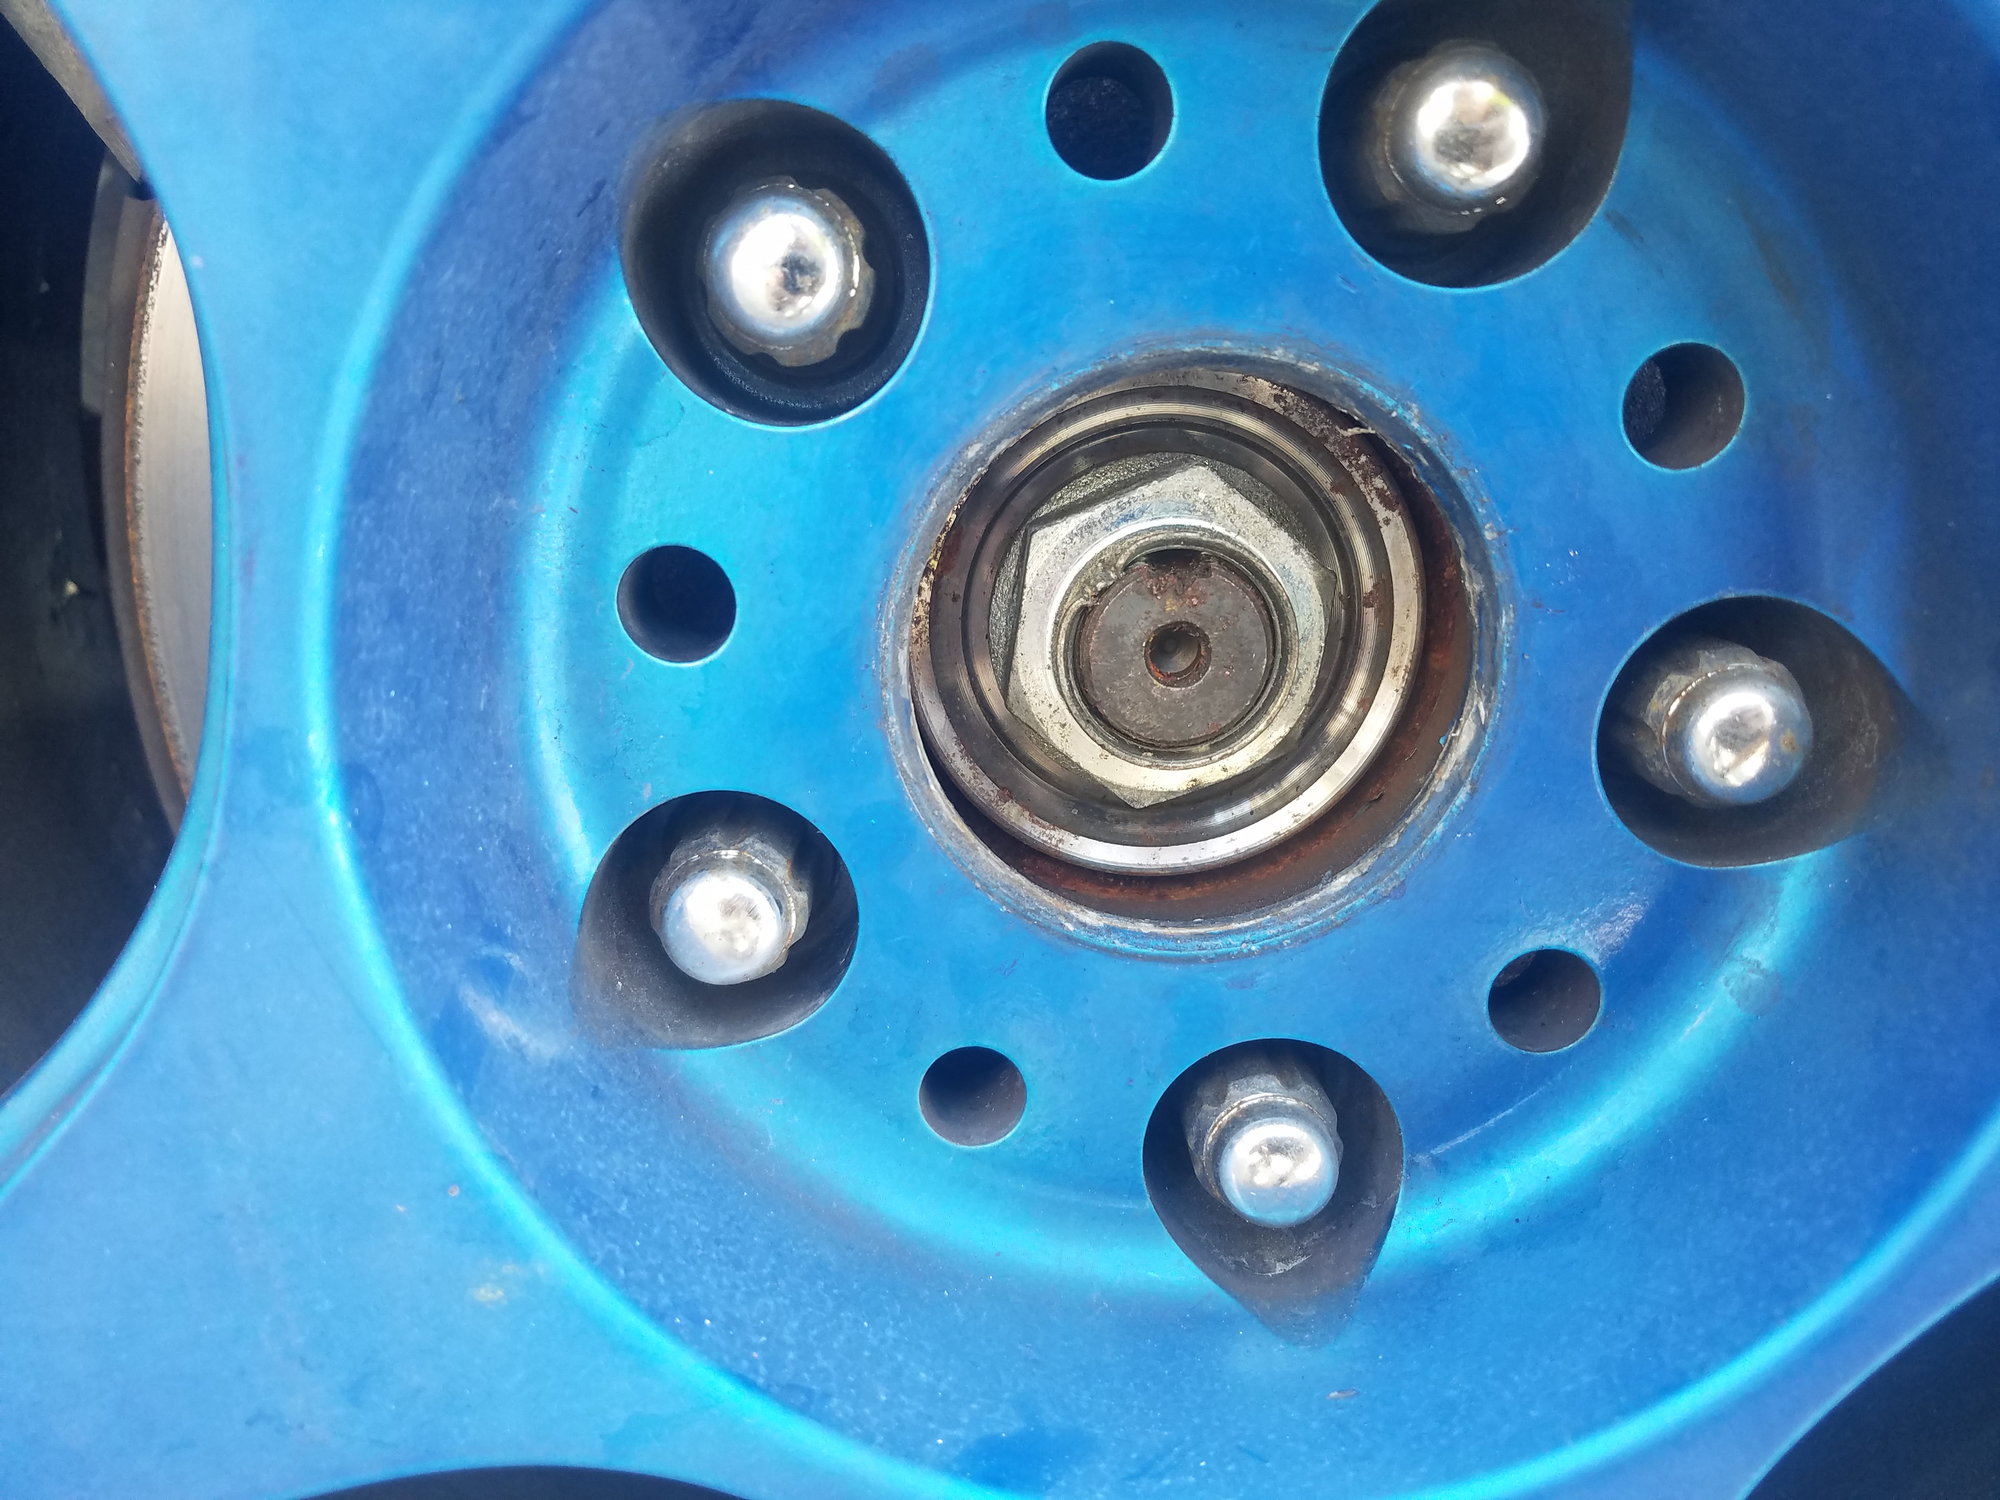 Can an impact from a collision loosen an axle nut? S2KI